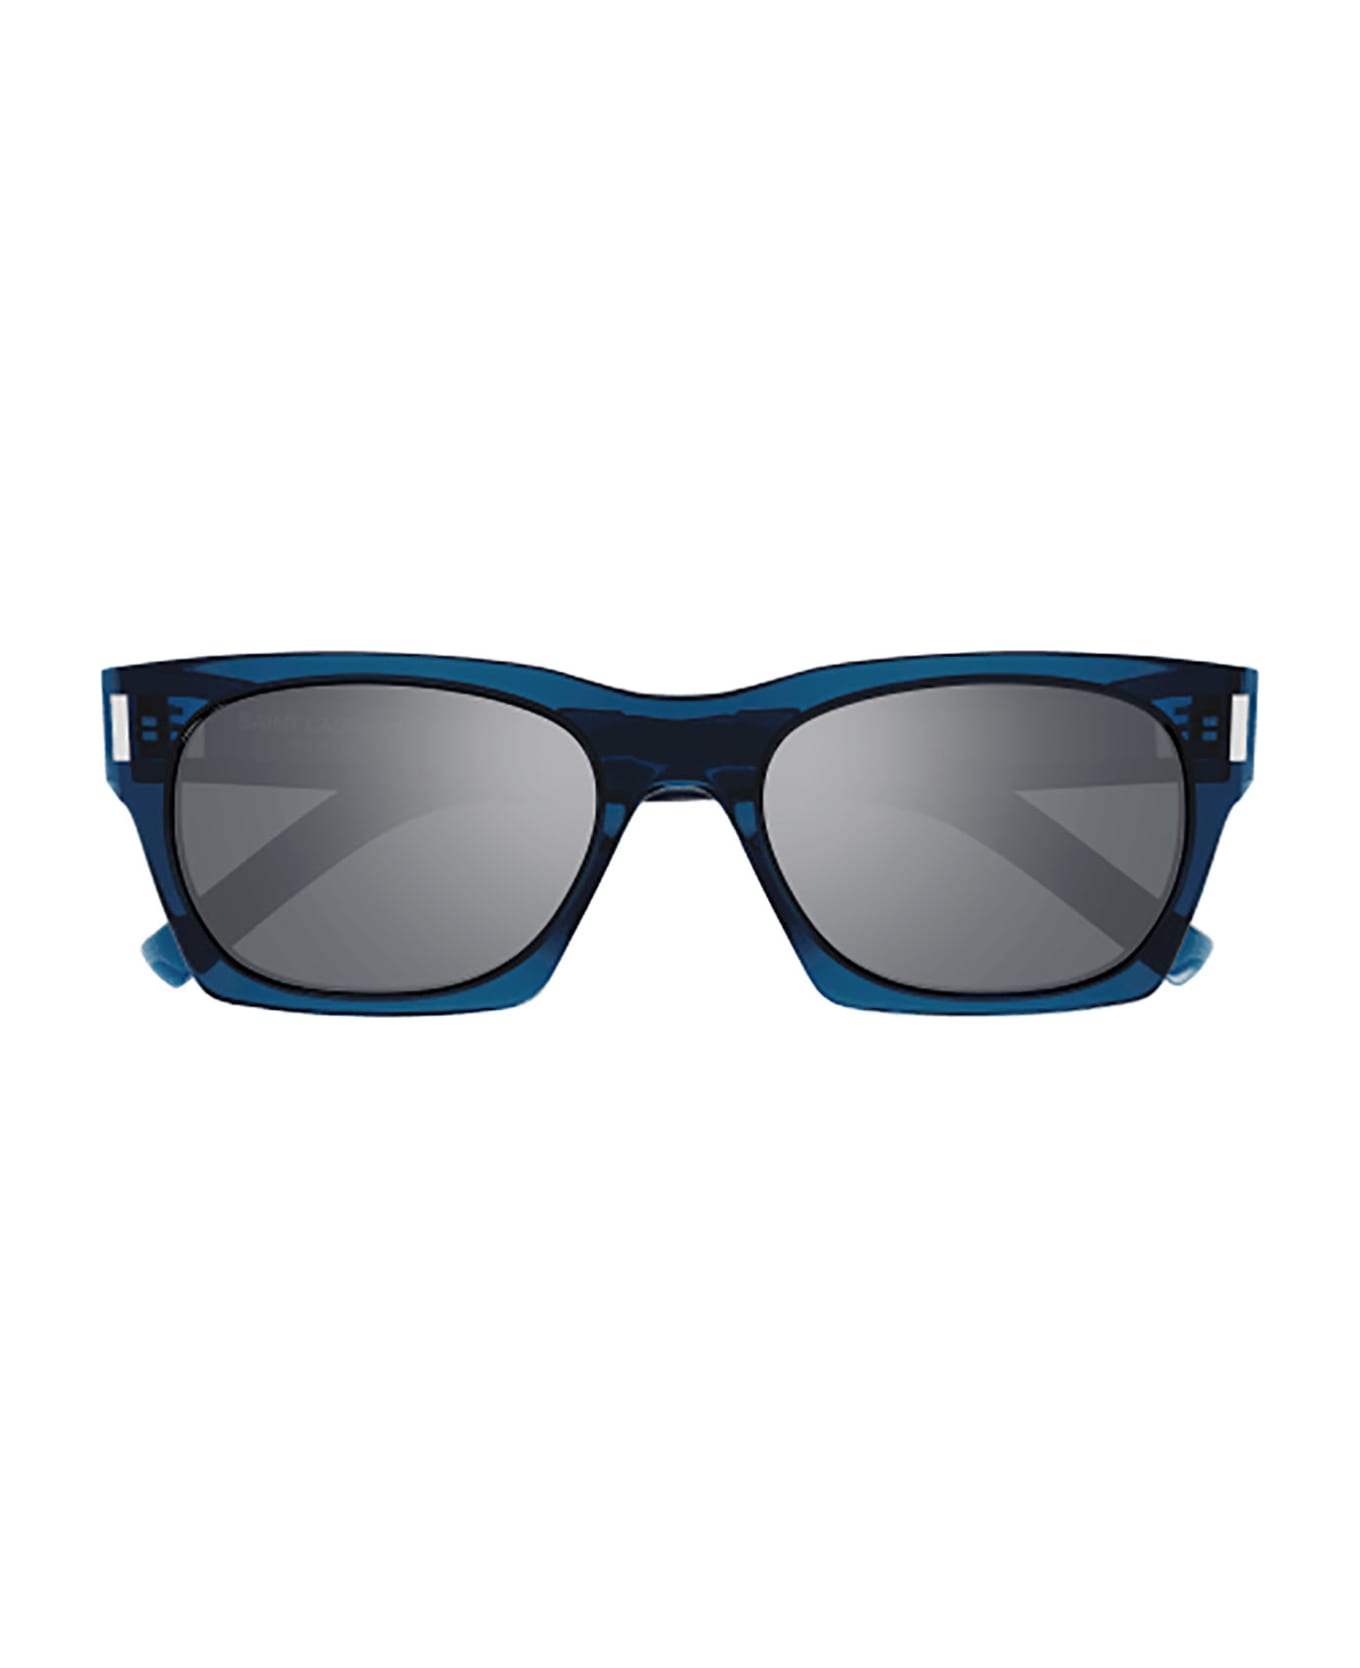 Saint Laurent Eyewear SL 402 Sunglasses - Blue Blue Silver